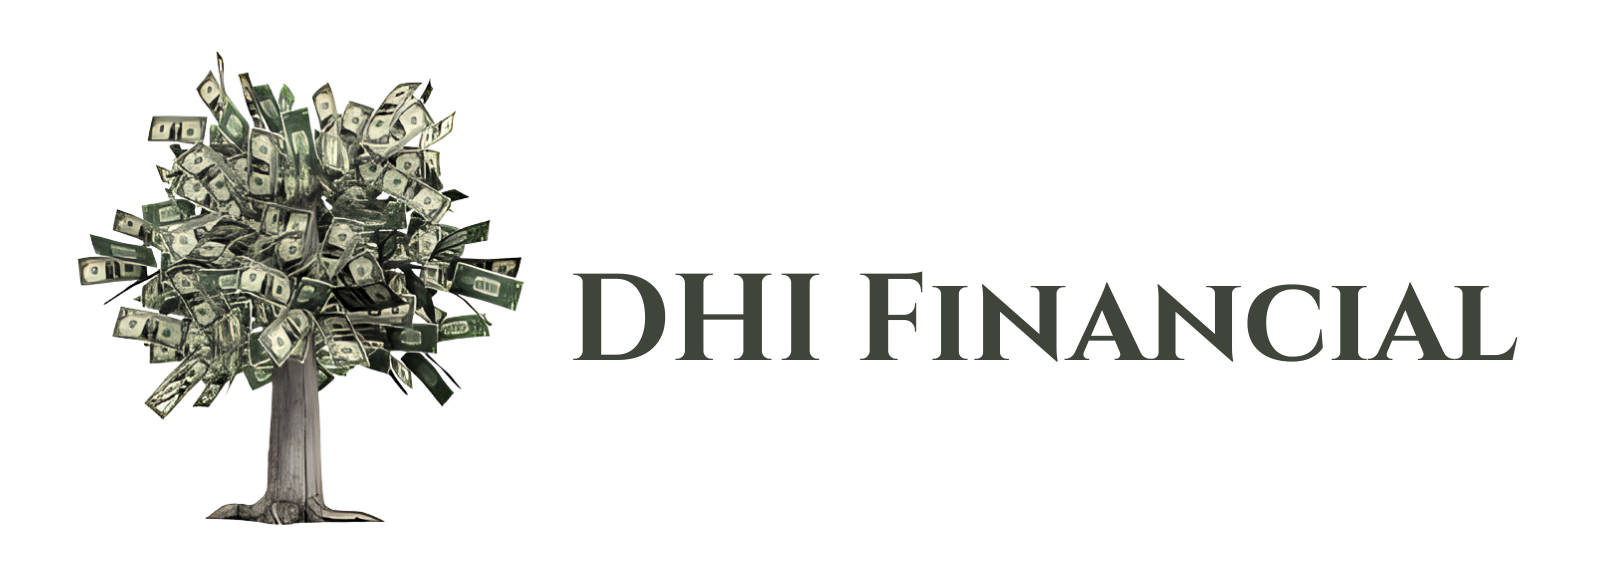 (c) Dhifinancial.com